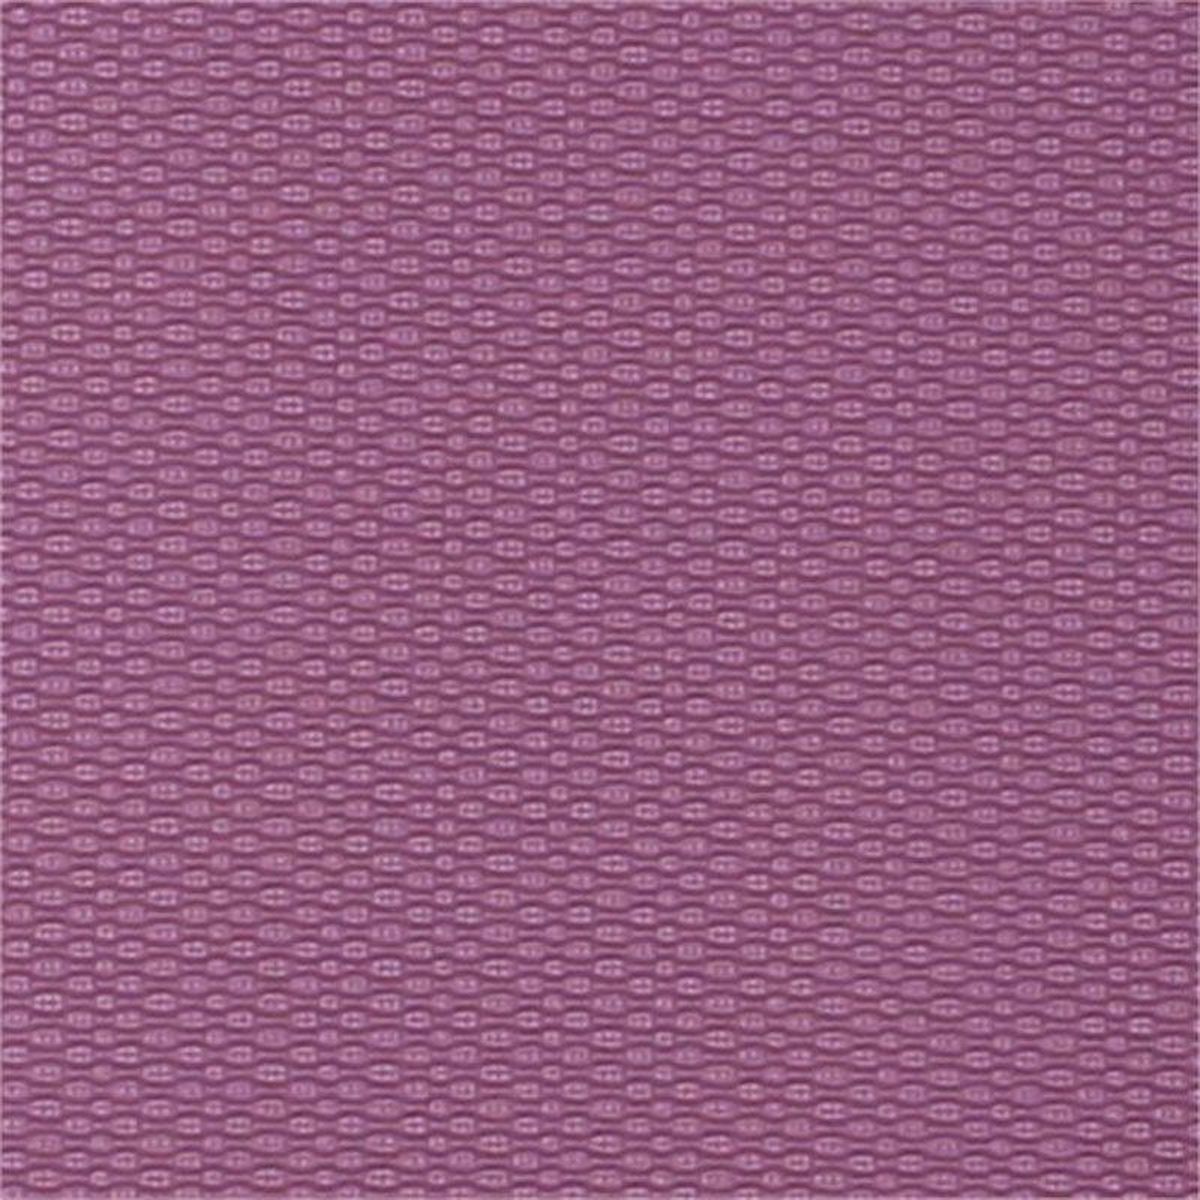 Yoga mat TPE purple 1000 grs